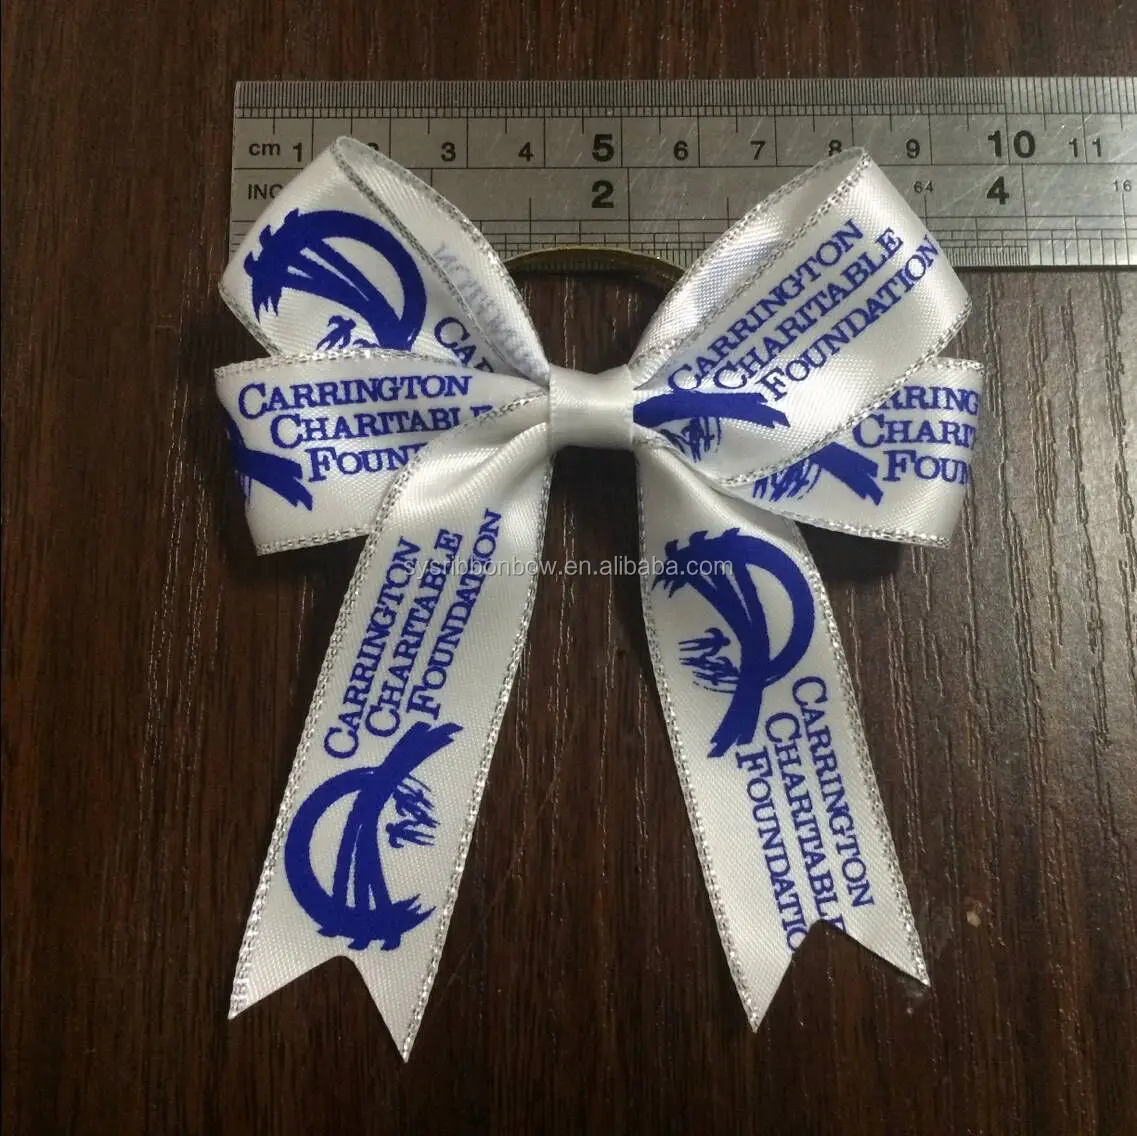 Professional Handmade Gift wrapping packaging adhesive ribbon bow